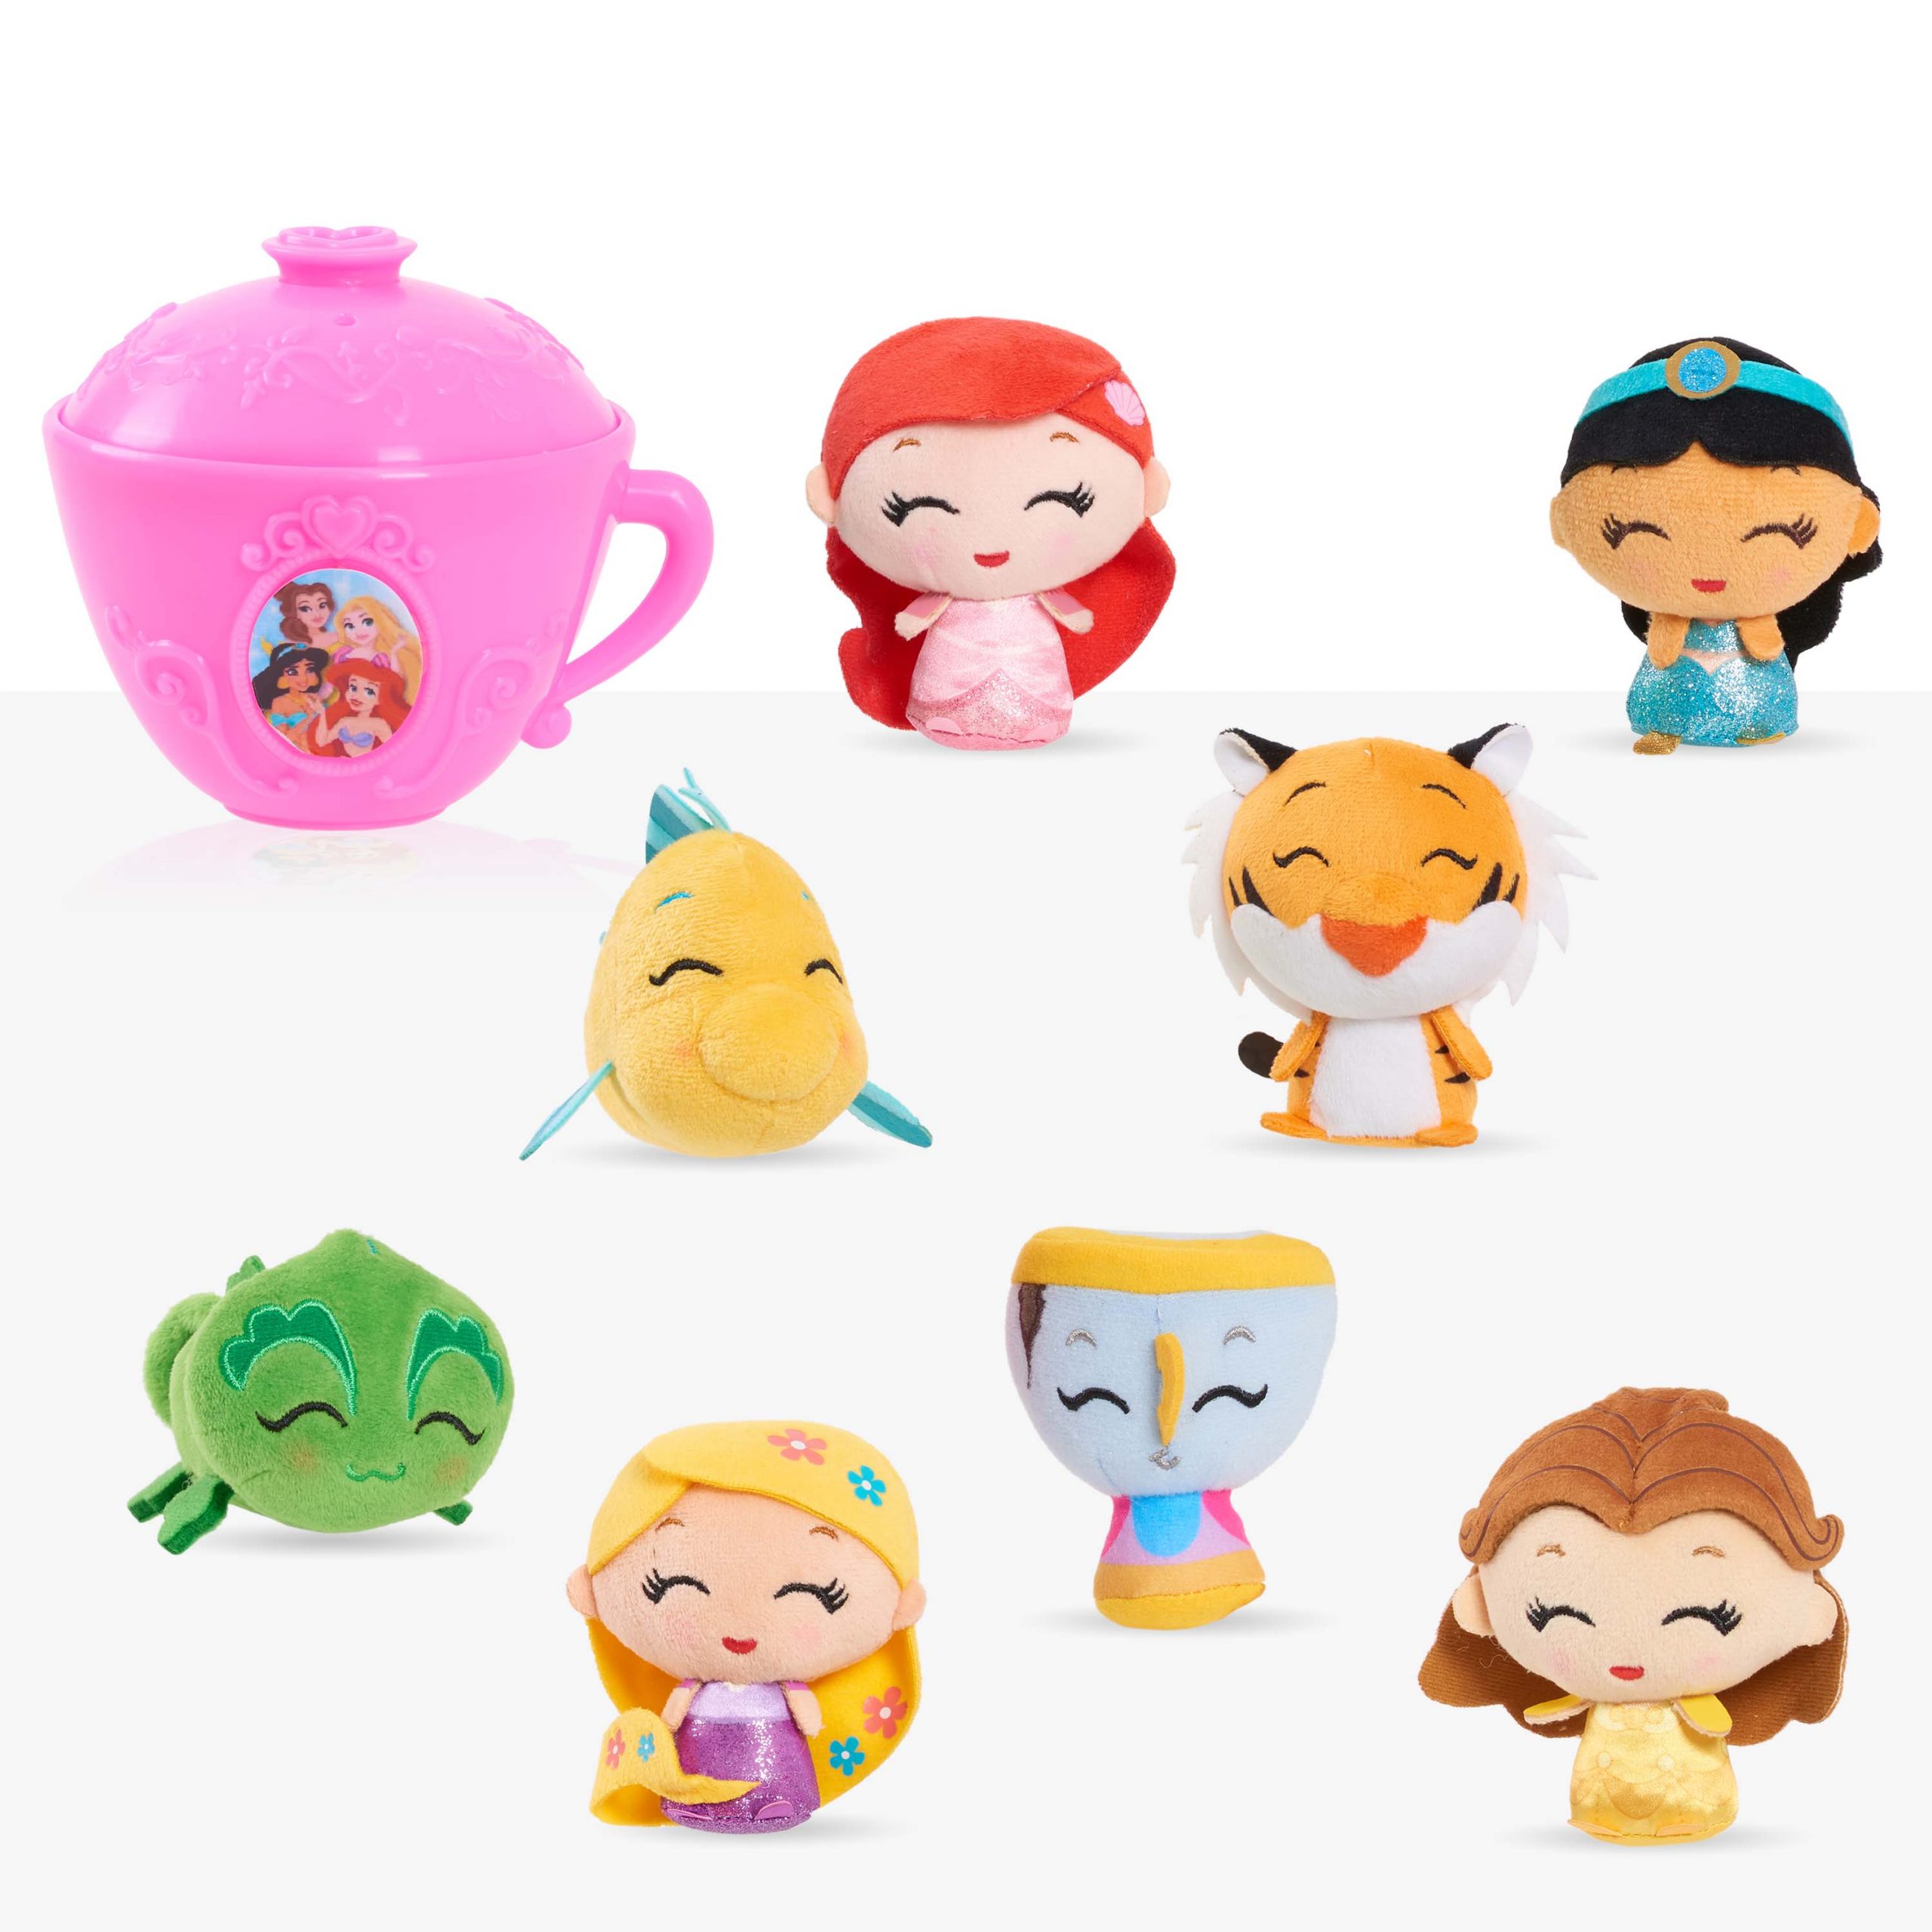 14850 Disney Princess Mini Teacup Capsule Plush Group